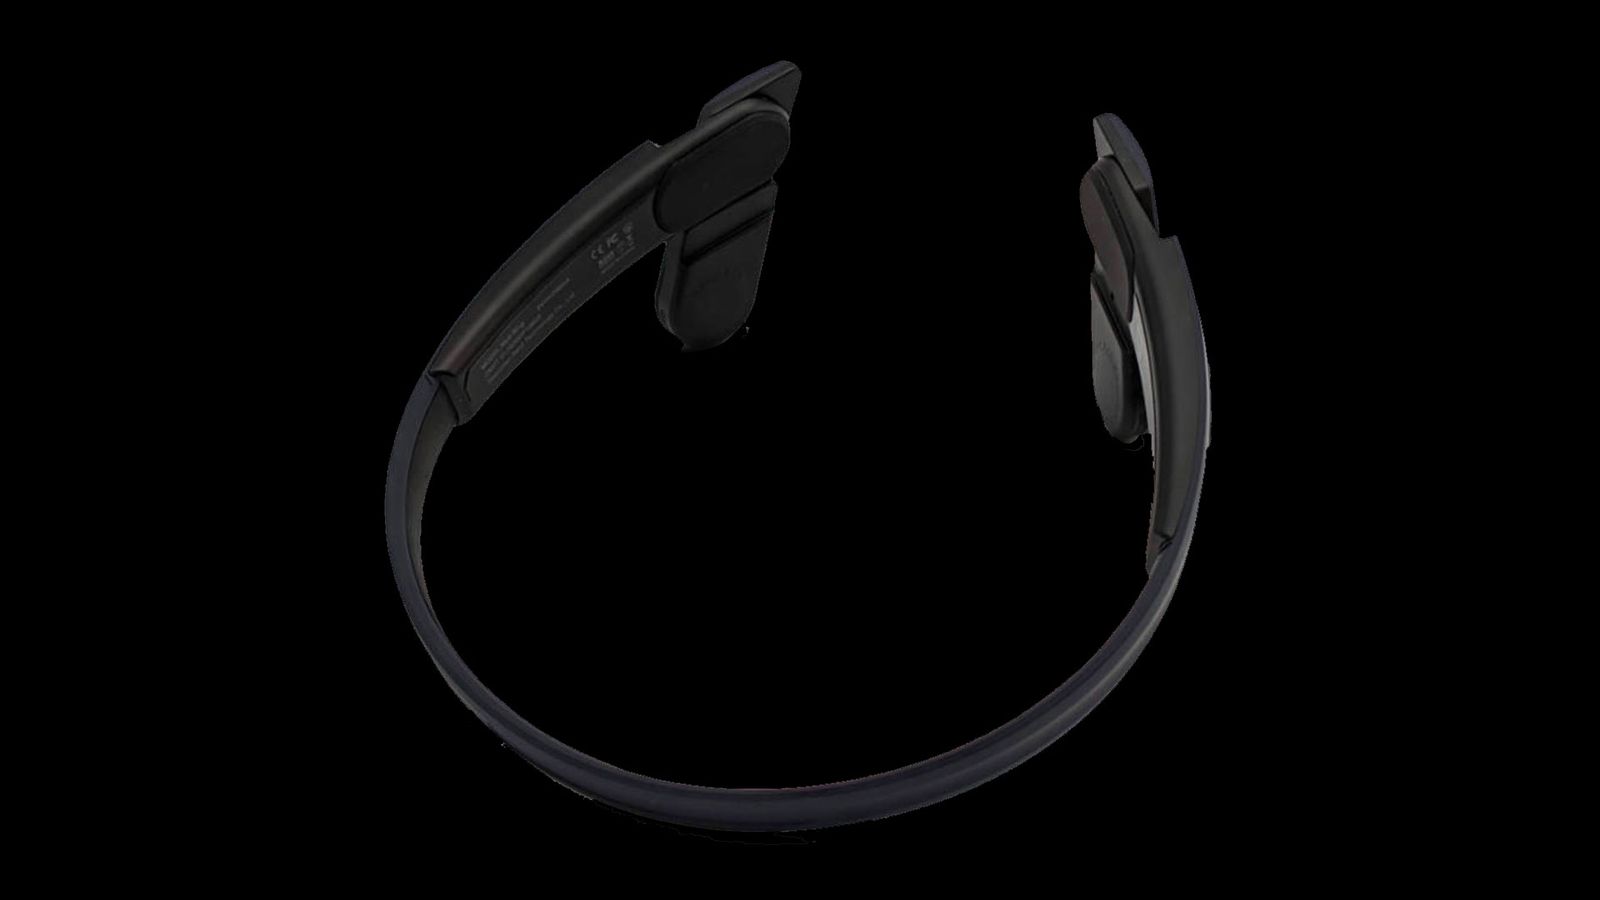 Mu6 Ring product image black set of open-ear headphones.